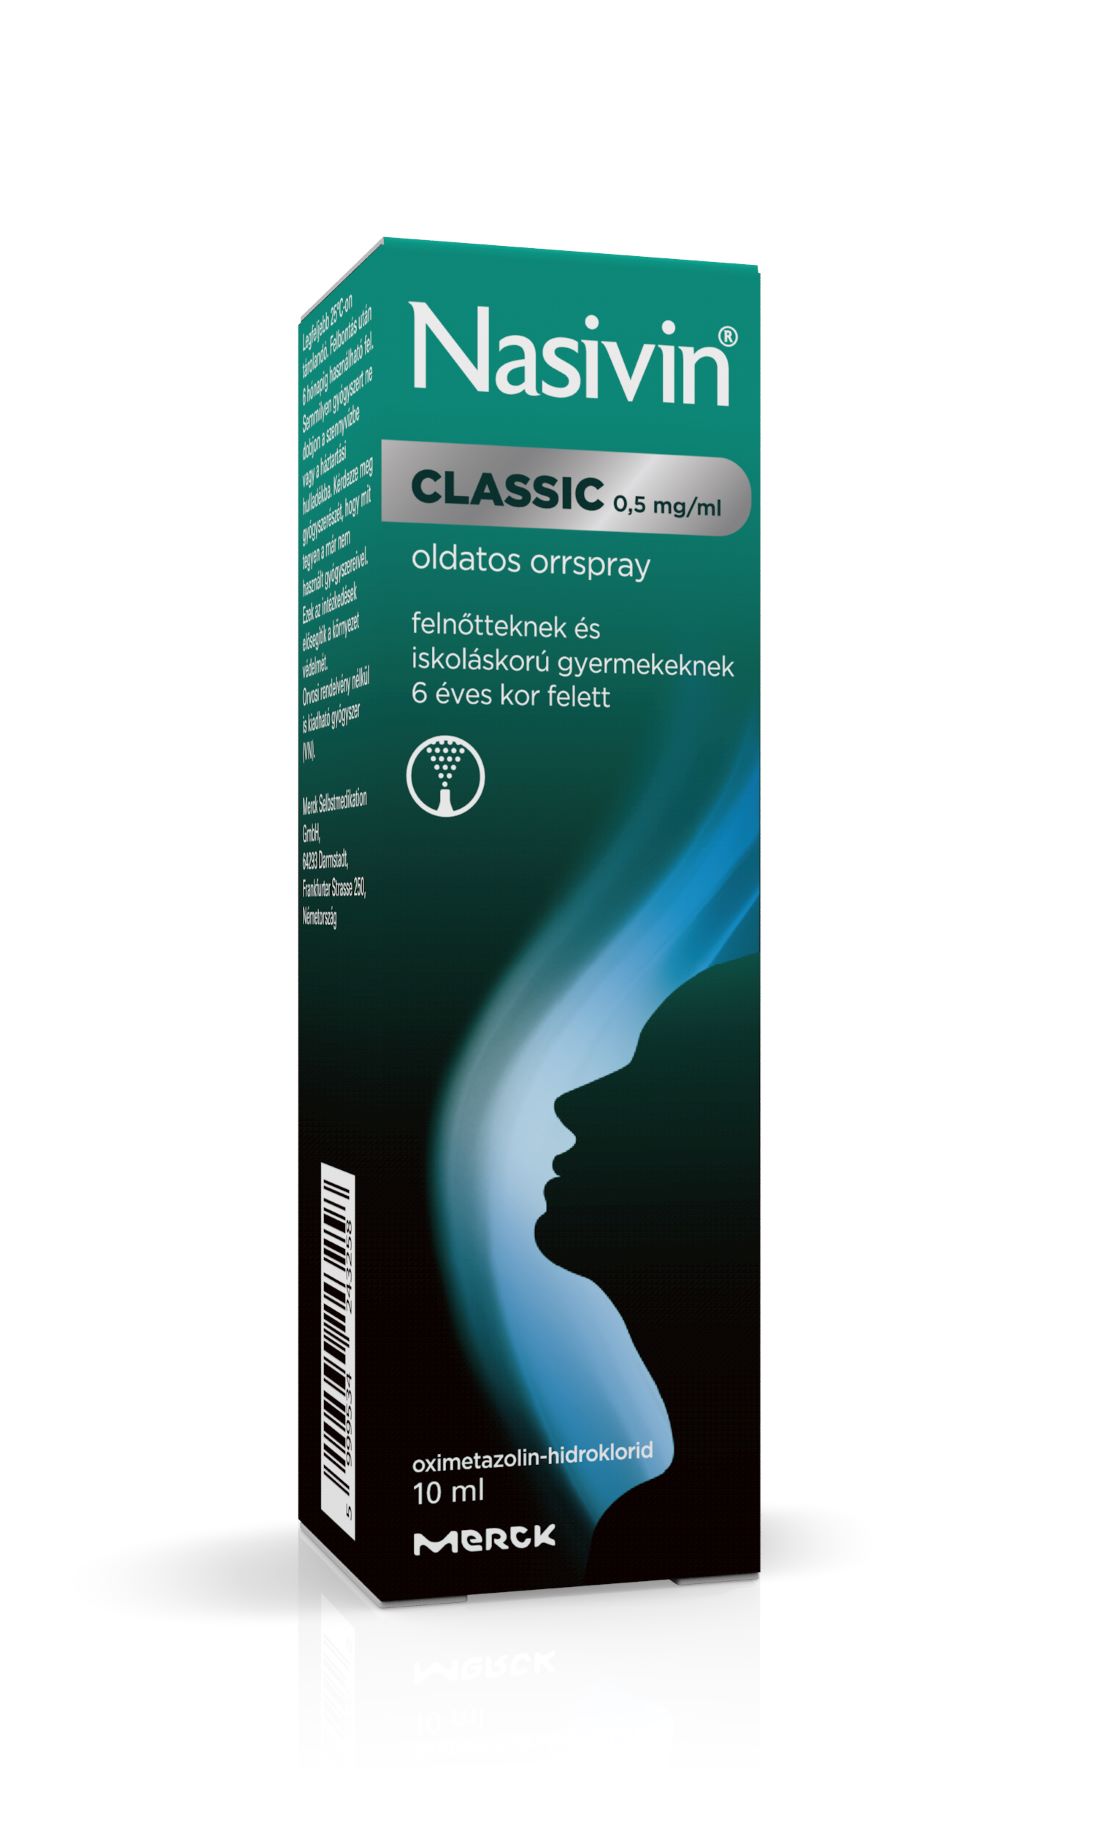 Nasivin Classic 0,5 mg/ml oldatos orrspray